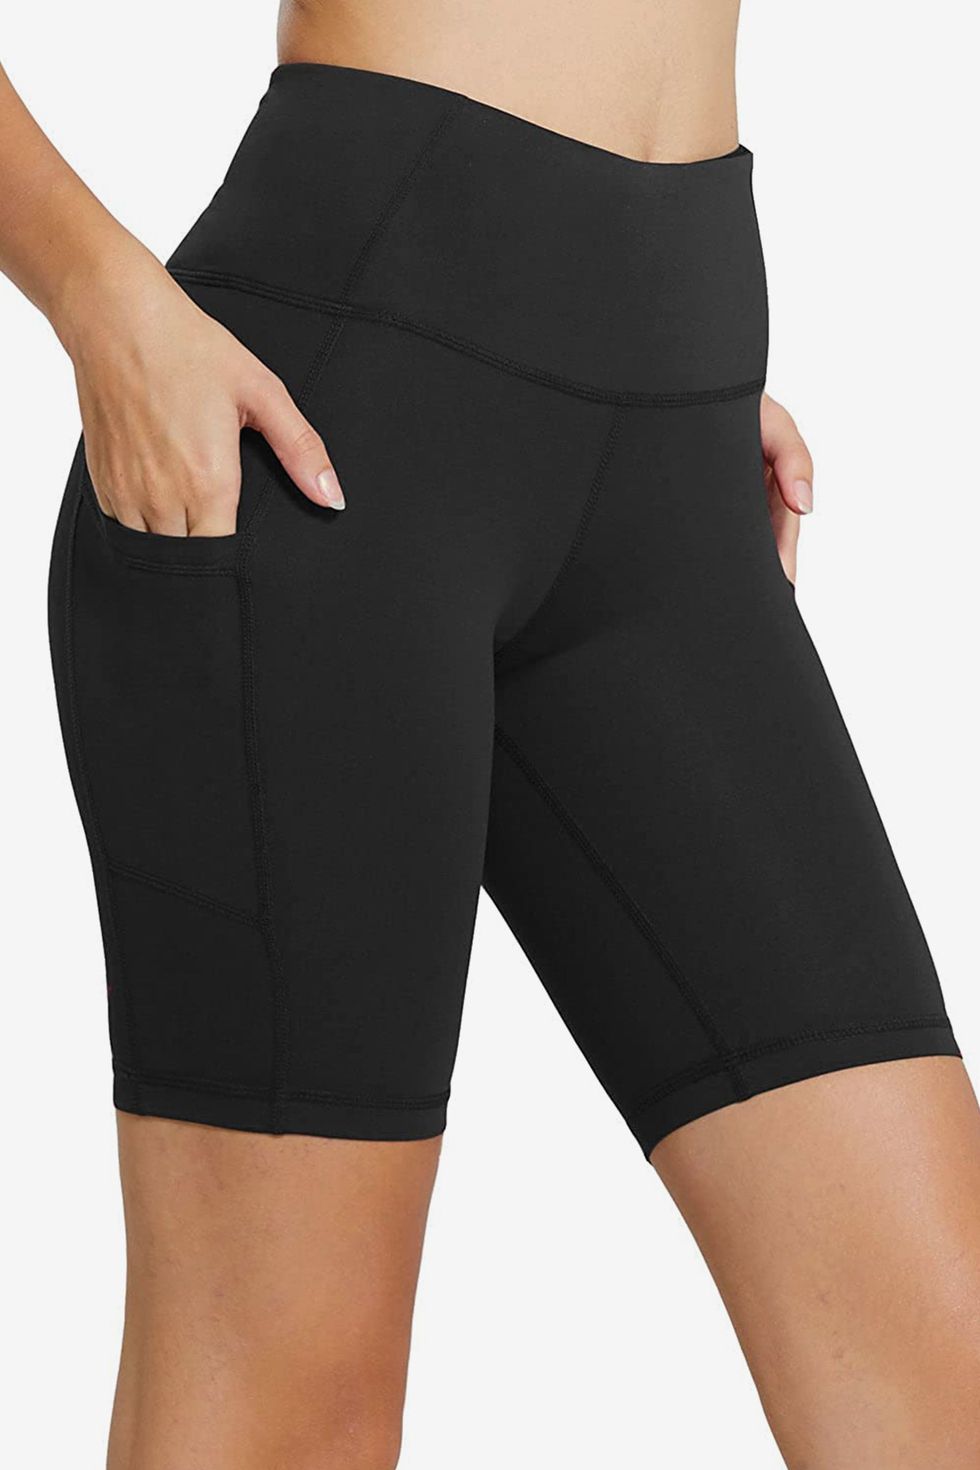 Women Stretch Biker Bike Shorts Outdoor Cycling Elastic Polyester High  Waist Tight Shorts Pants Workout Spandex Leggings Knee Length Short Pants